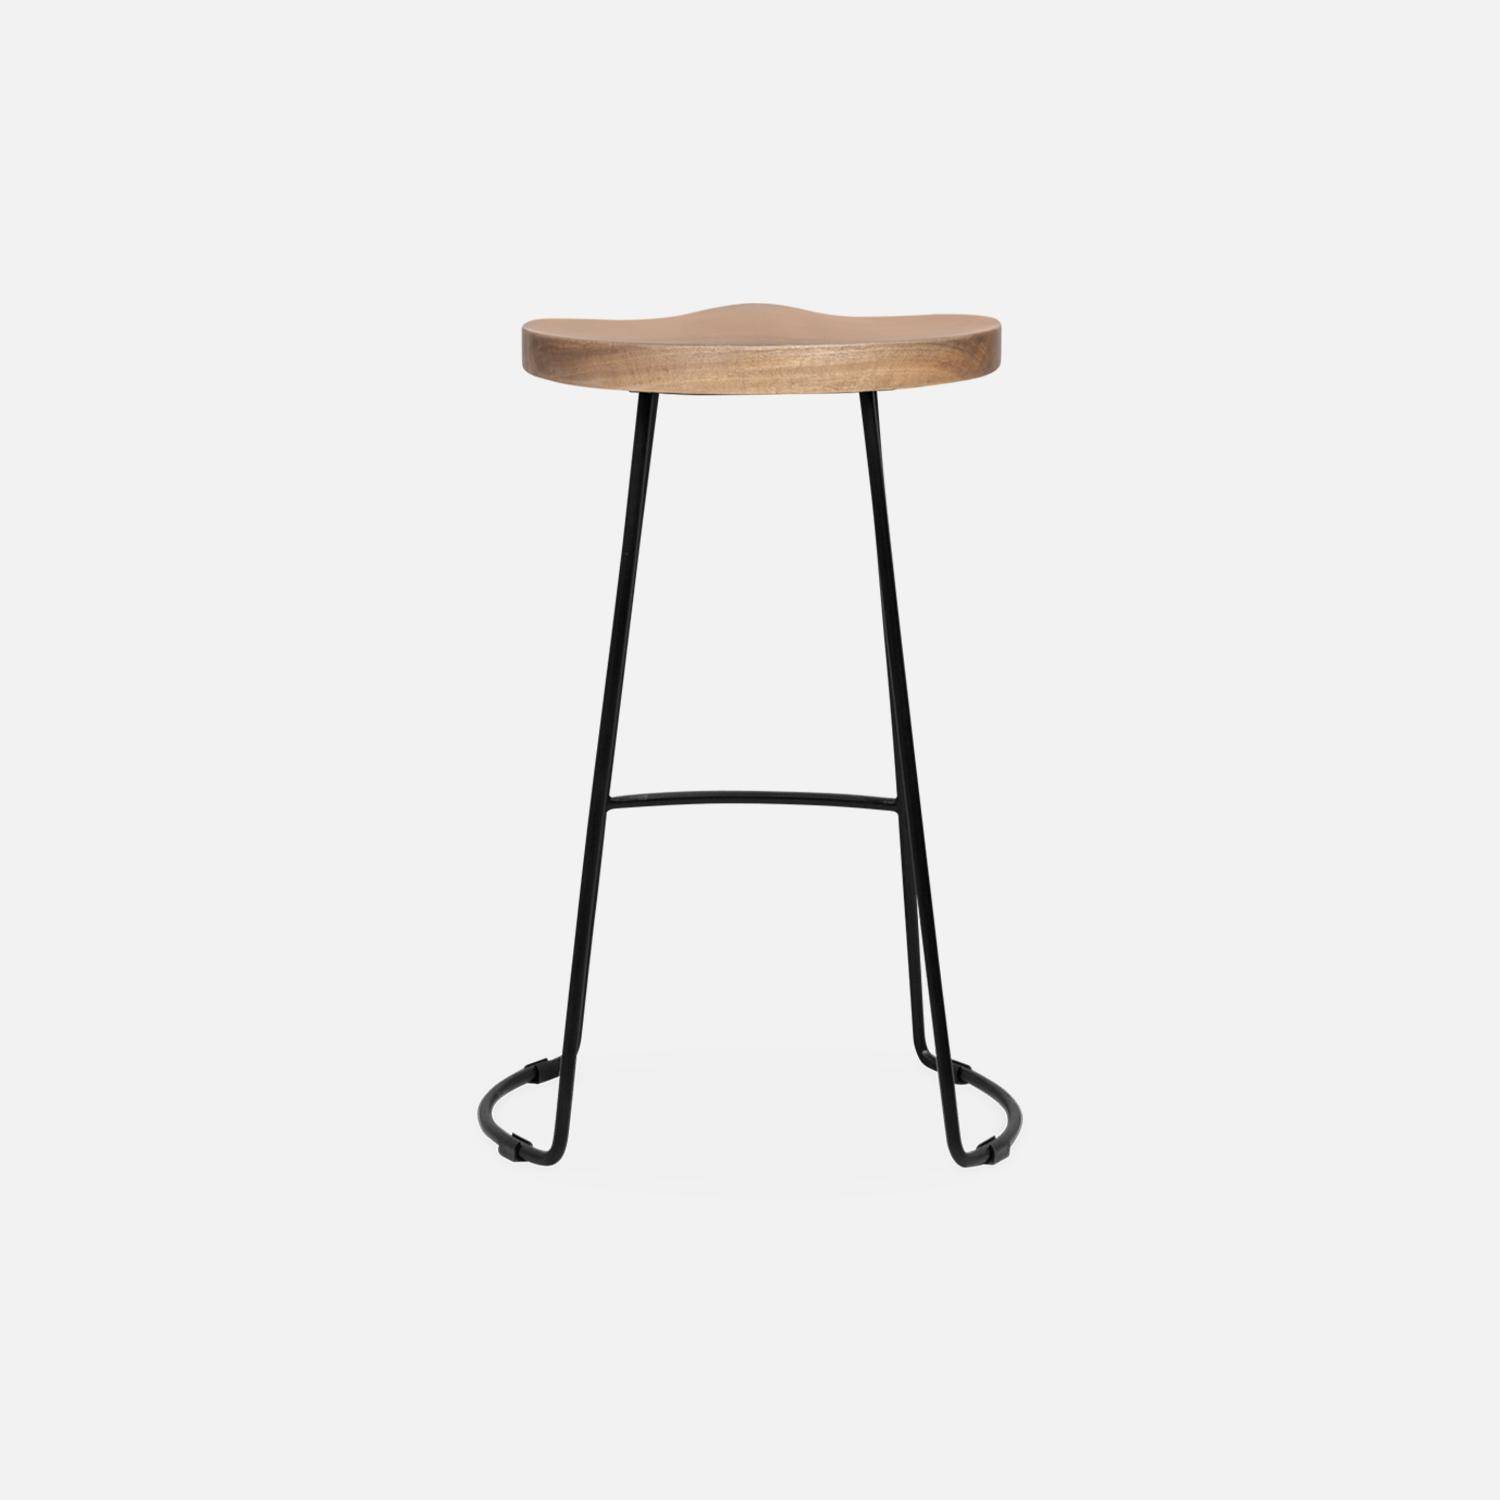 Pair of industrial metal and wooden bar stools, 44x36x65cm, Jaya, Natural, Mango wood seat, black metal legs,sweeek,Photo6